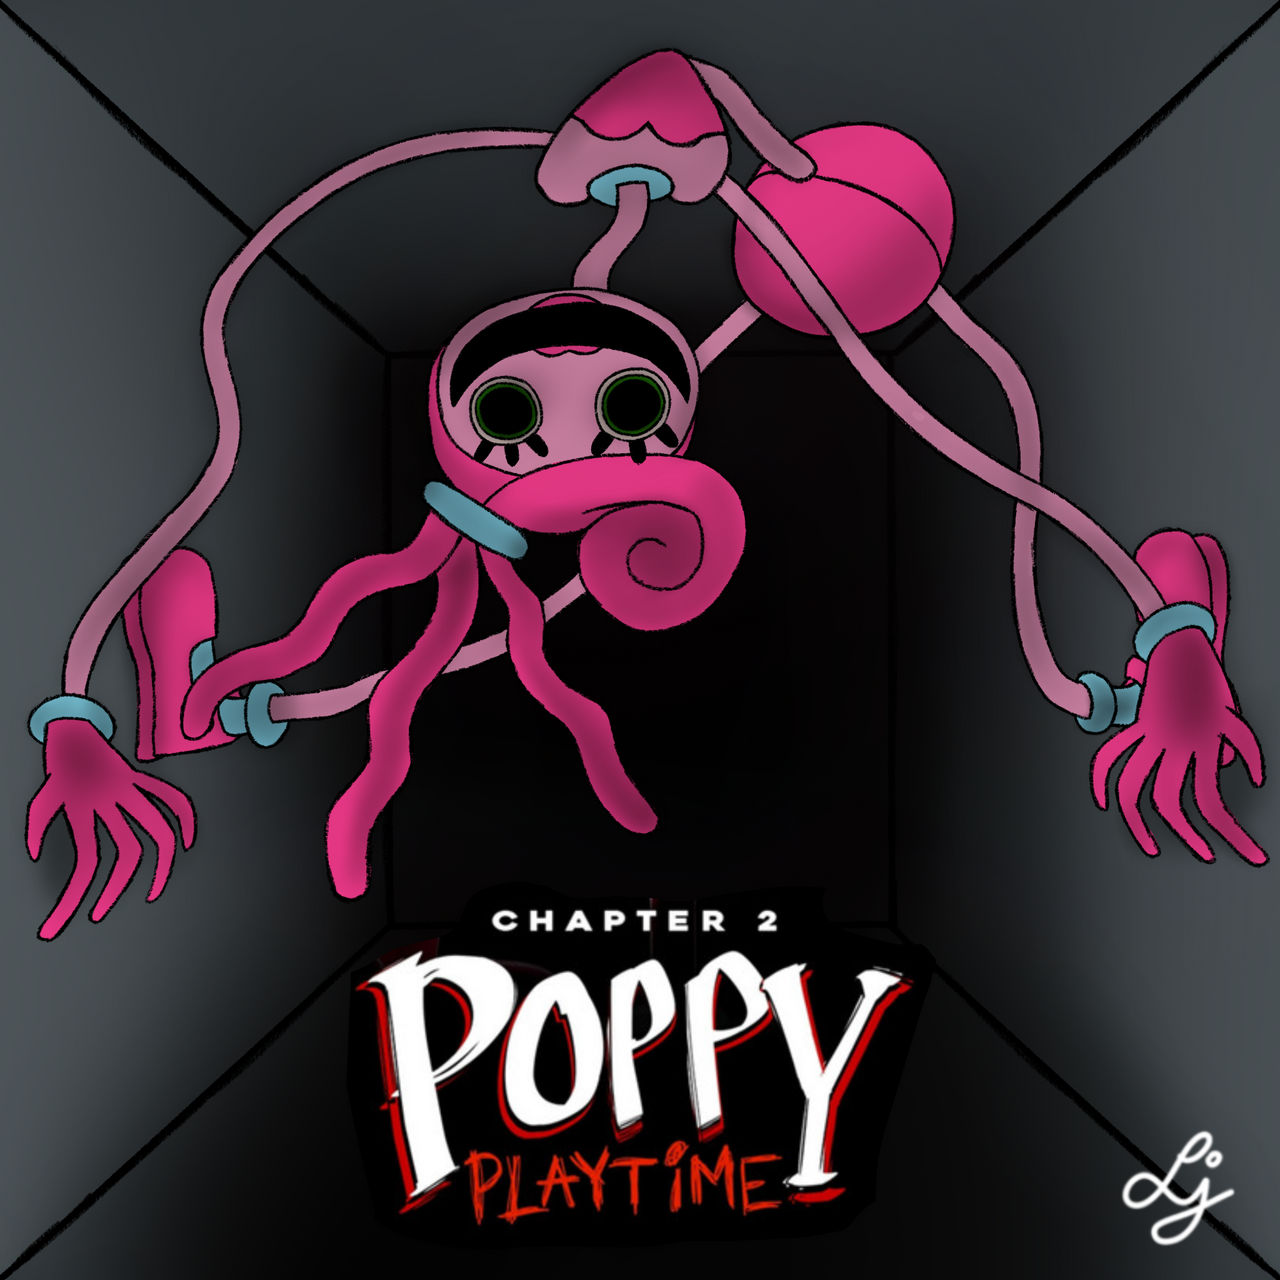 Poppy Playtime Chapter 2 - 'Mommy Long Legs' by HealerCharm on DeviantArt